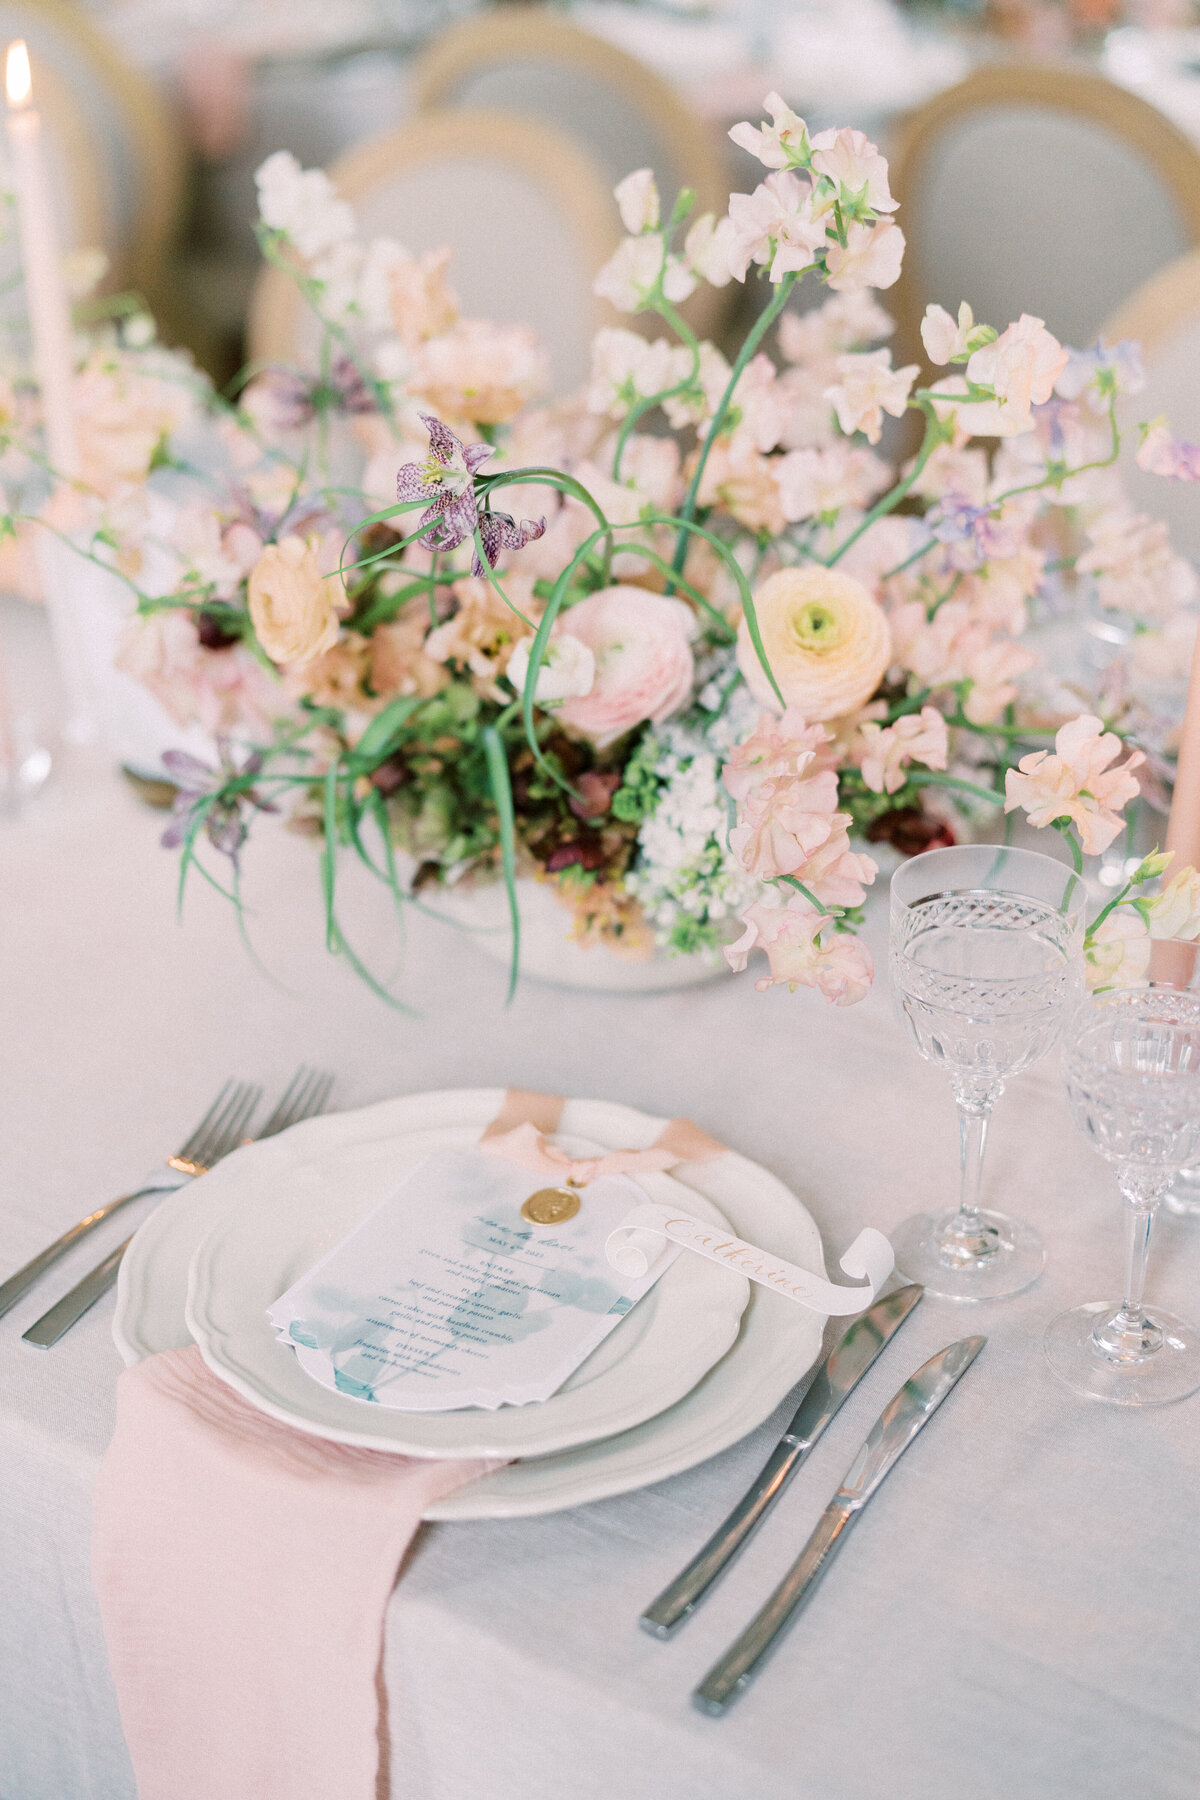 Sarah Rae Floral Designs Wedding Event Florist Flowers Kentucky Chic Whimsical Romantic Weddings55